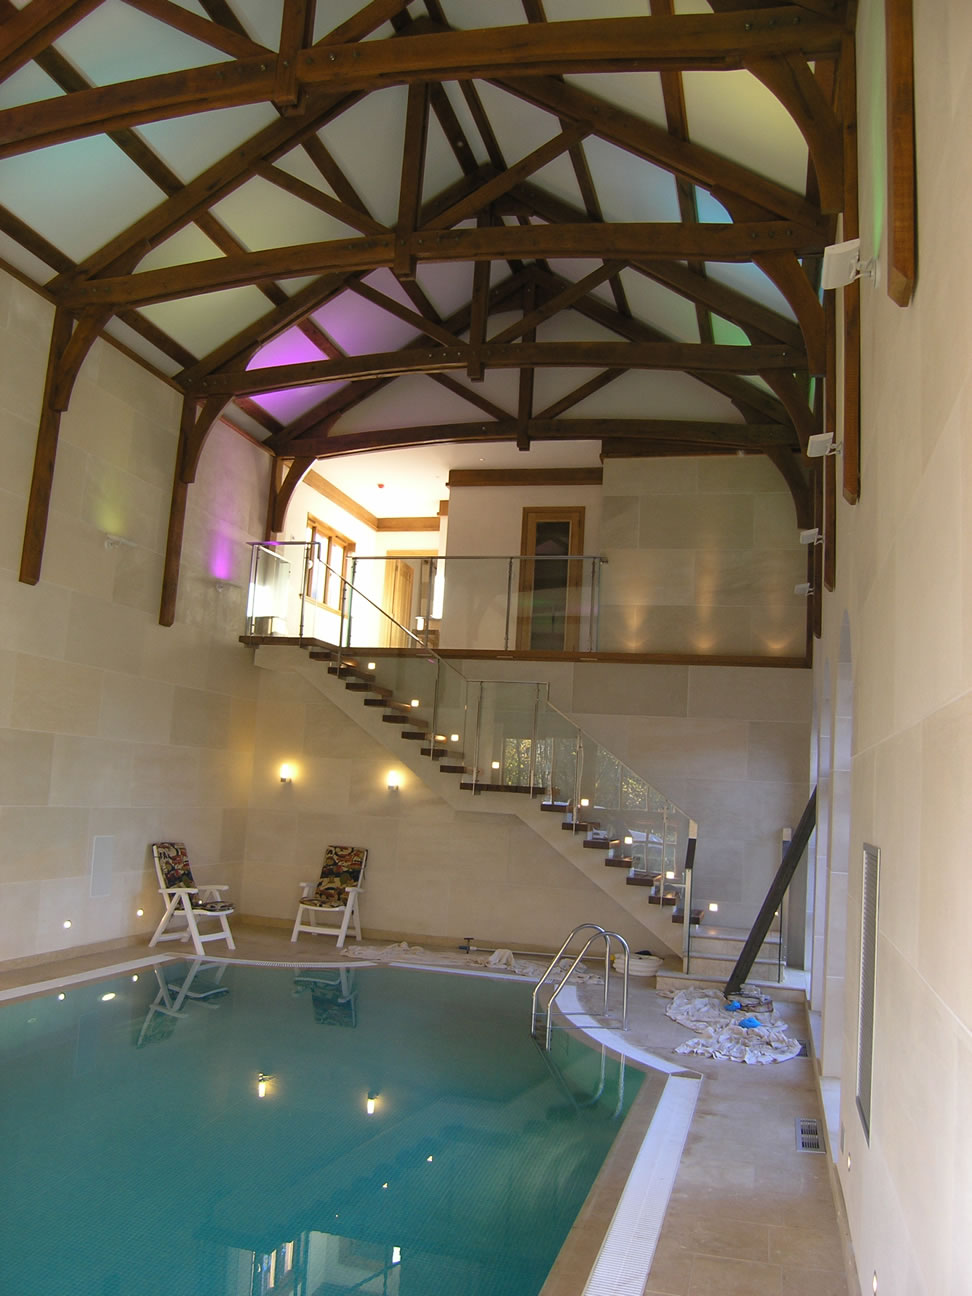 Stone block, private house swimming pool. Architect – Designworks